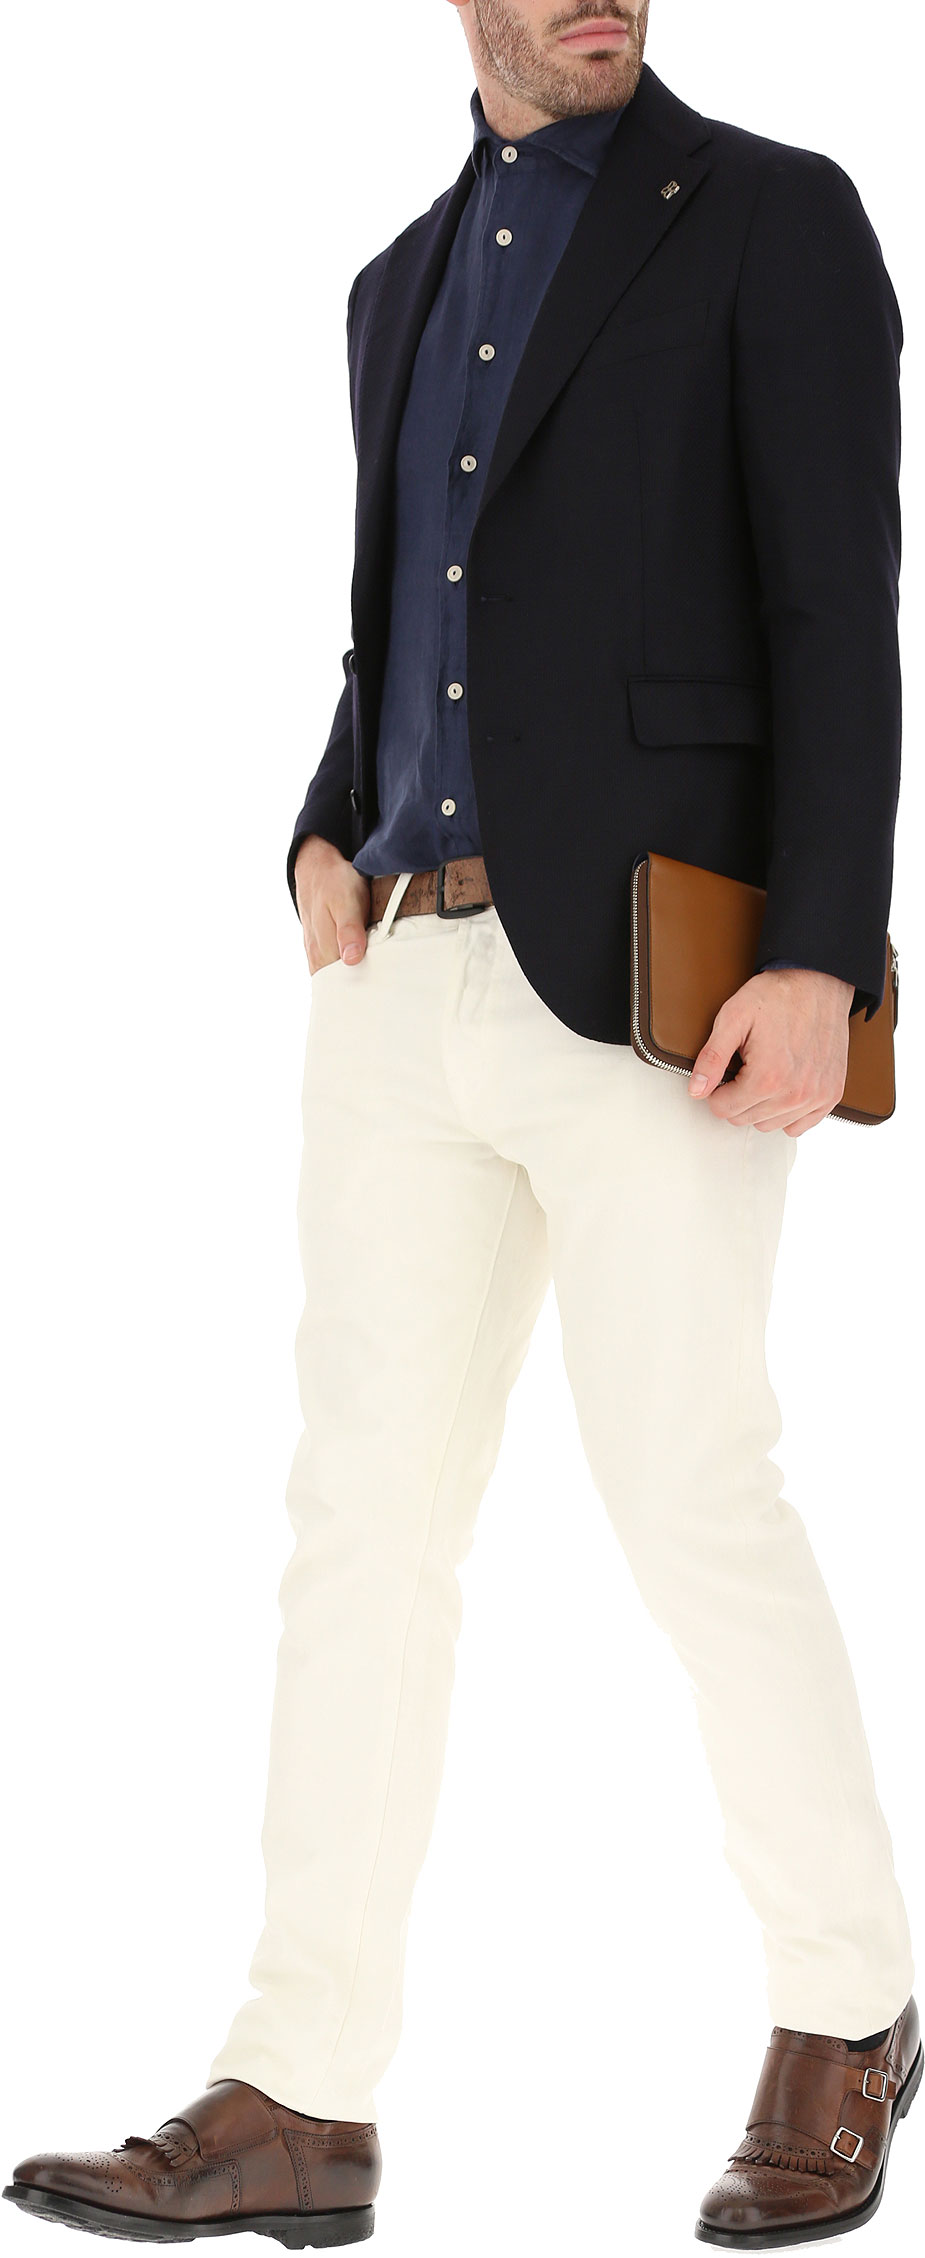 Mens Clothing Tom Ford, Style code: tfd001-bpj02-00